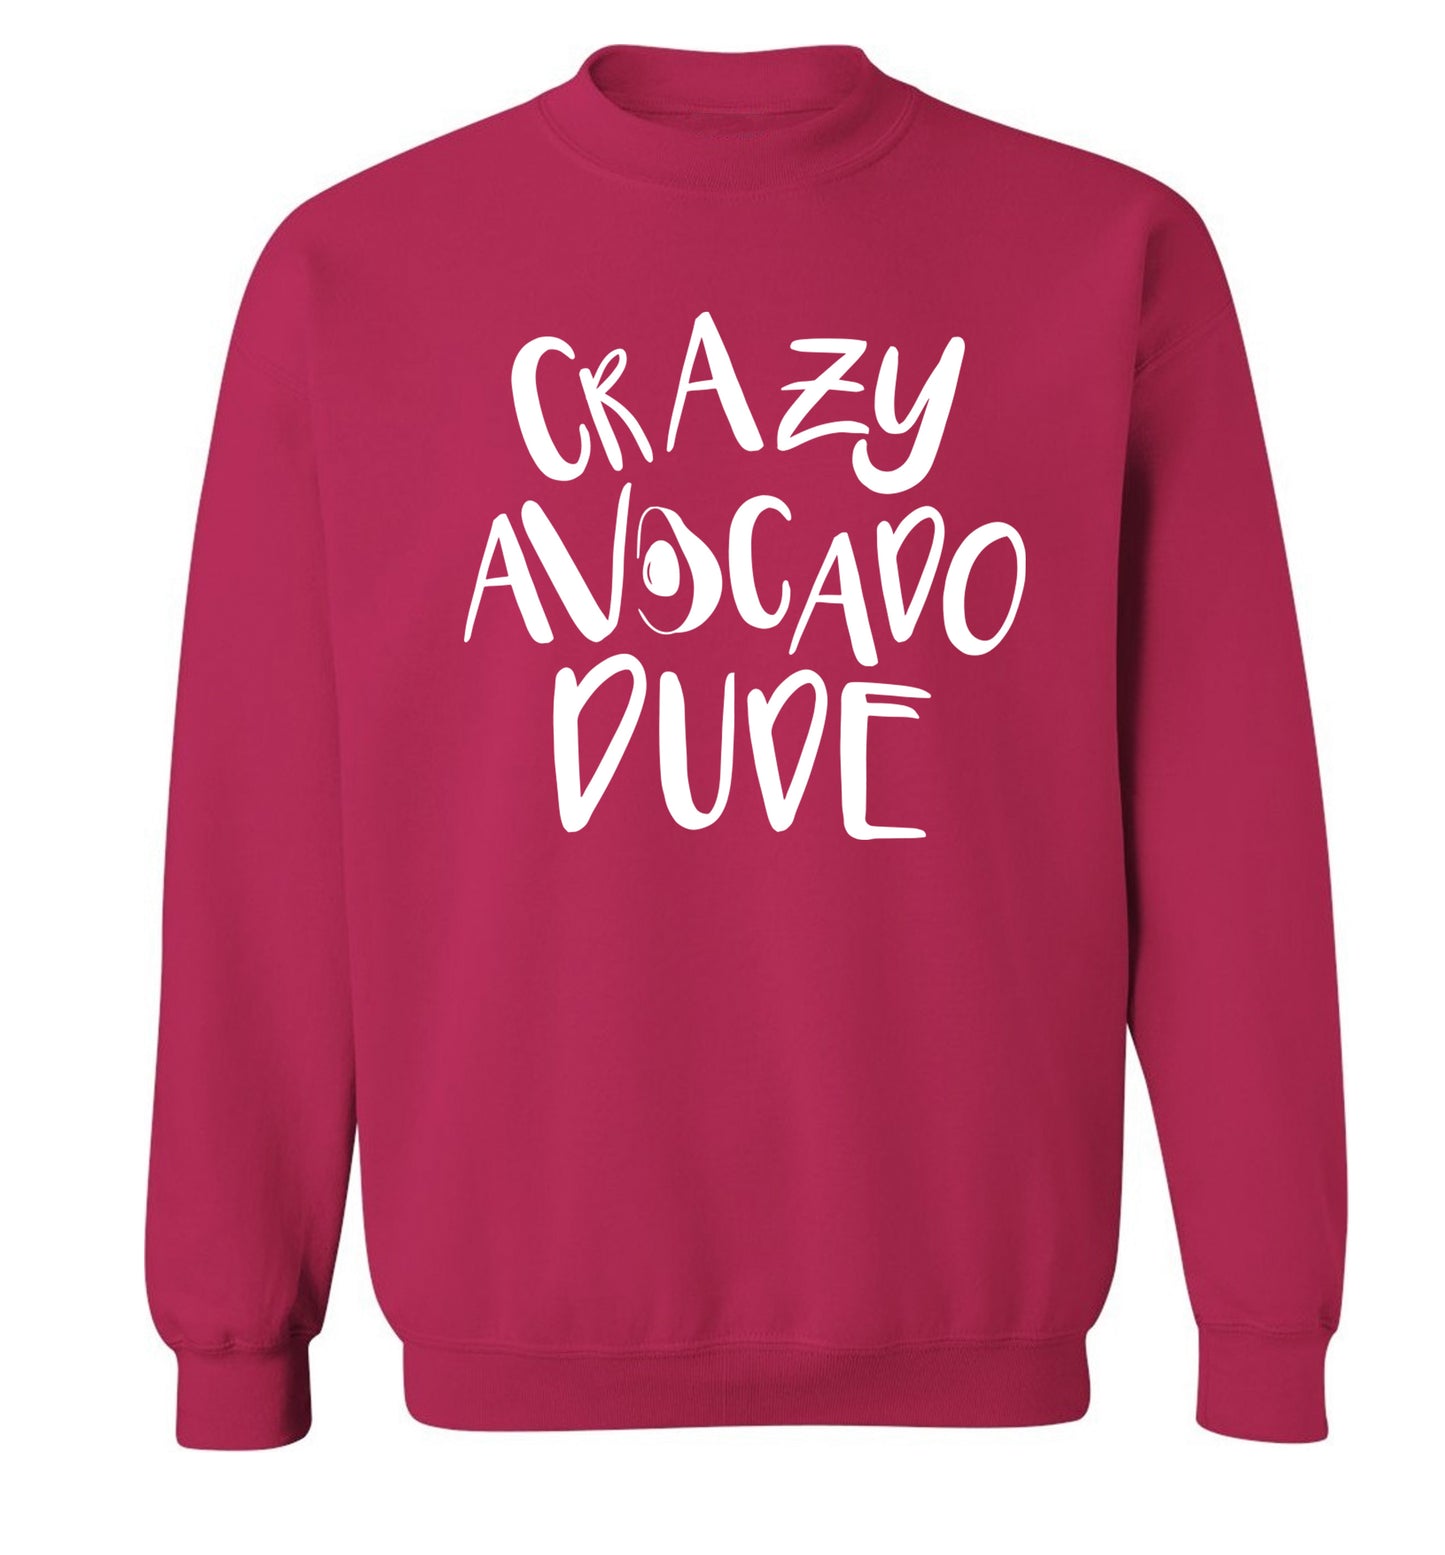 Crazy avocado dude Adult's unisex pink Sweater 2XL